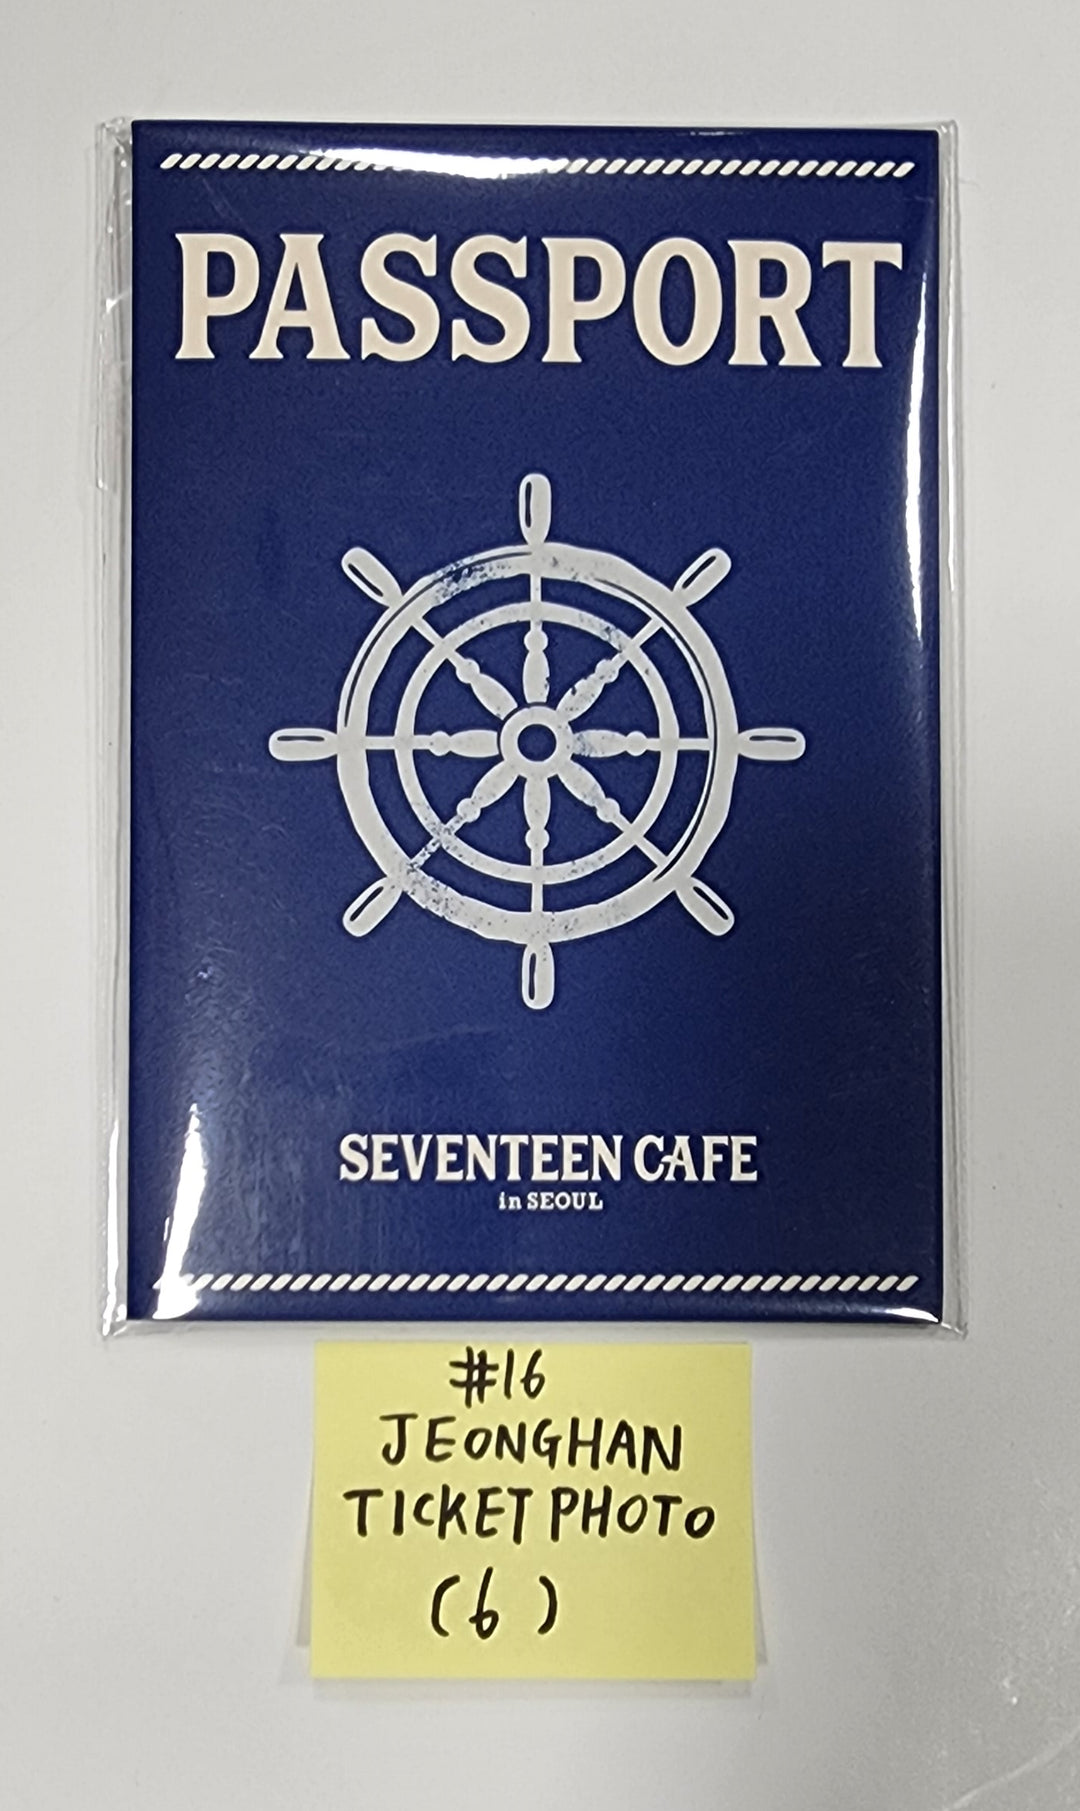 Seventeen 「Seventeen Cafe in Soul」オフィシャルMD 【再入荷7/27】